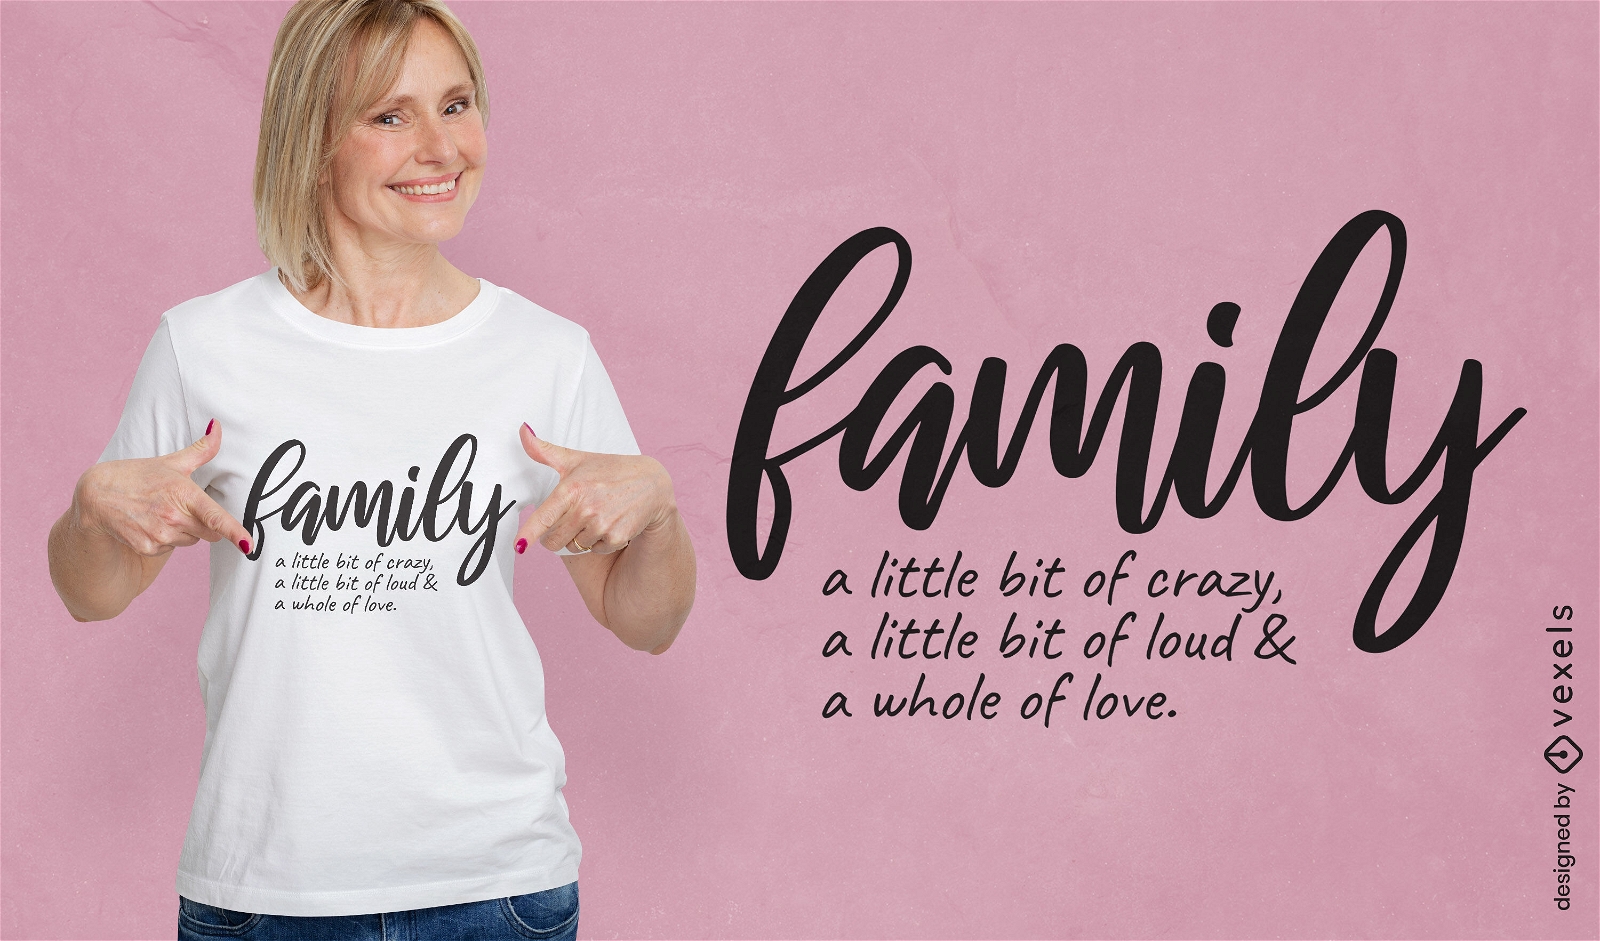 Crazy family quote t-shirt design